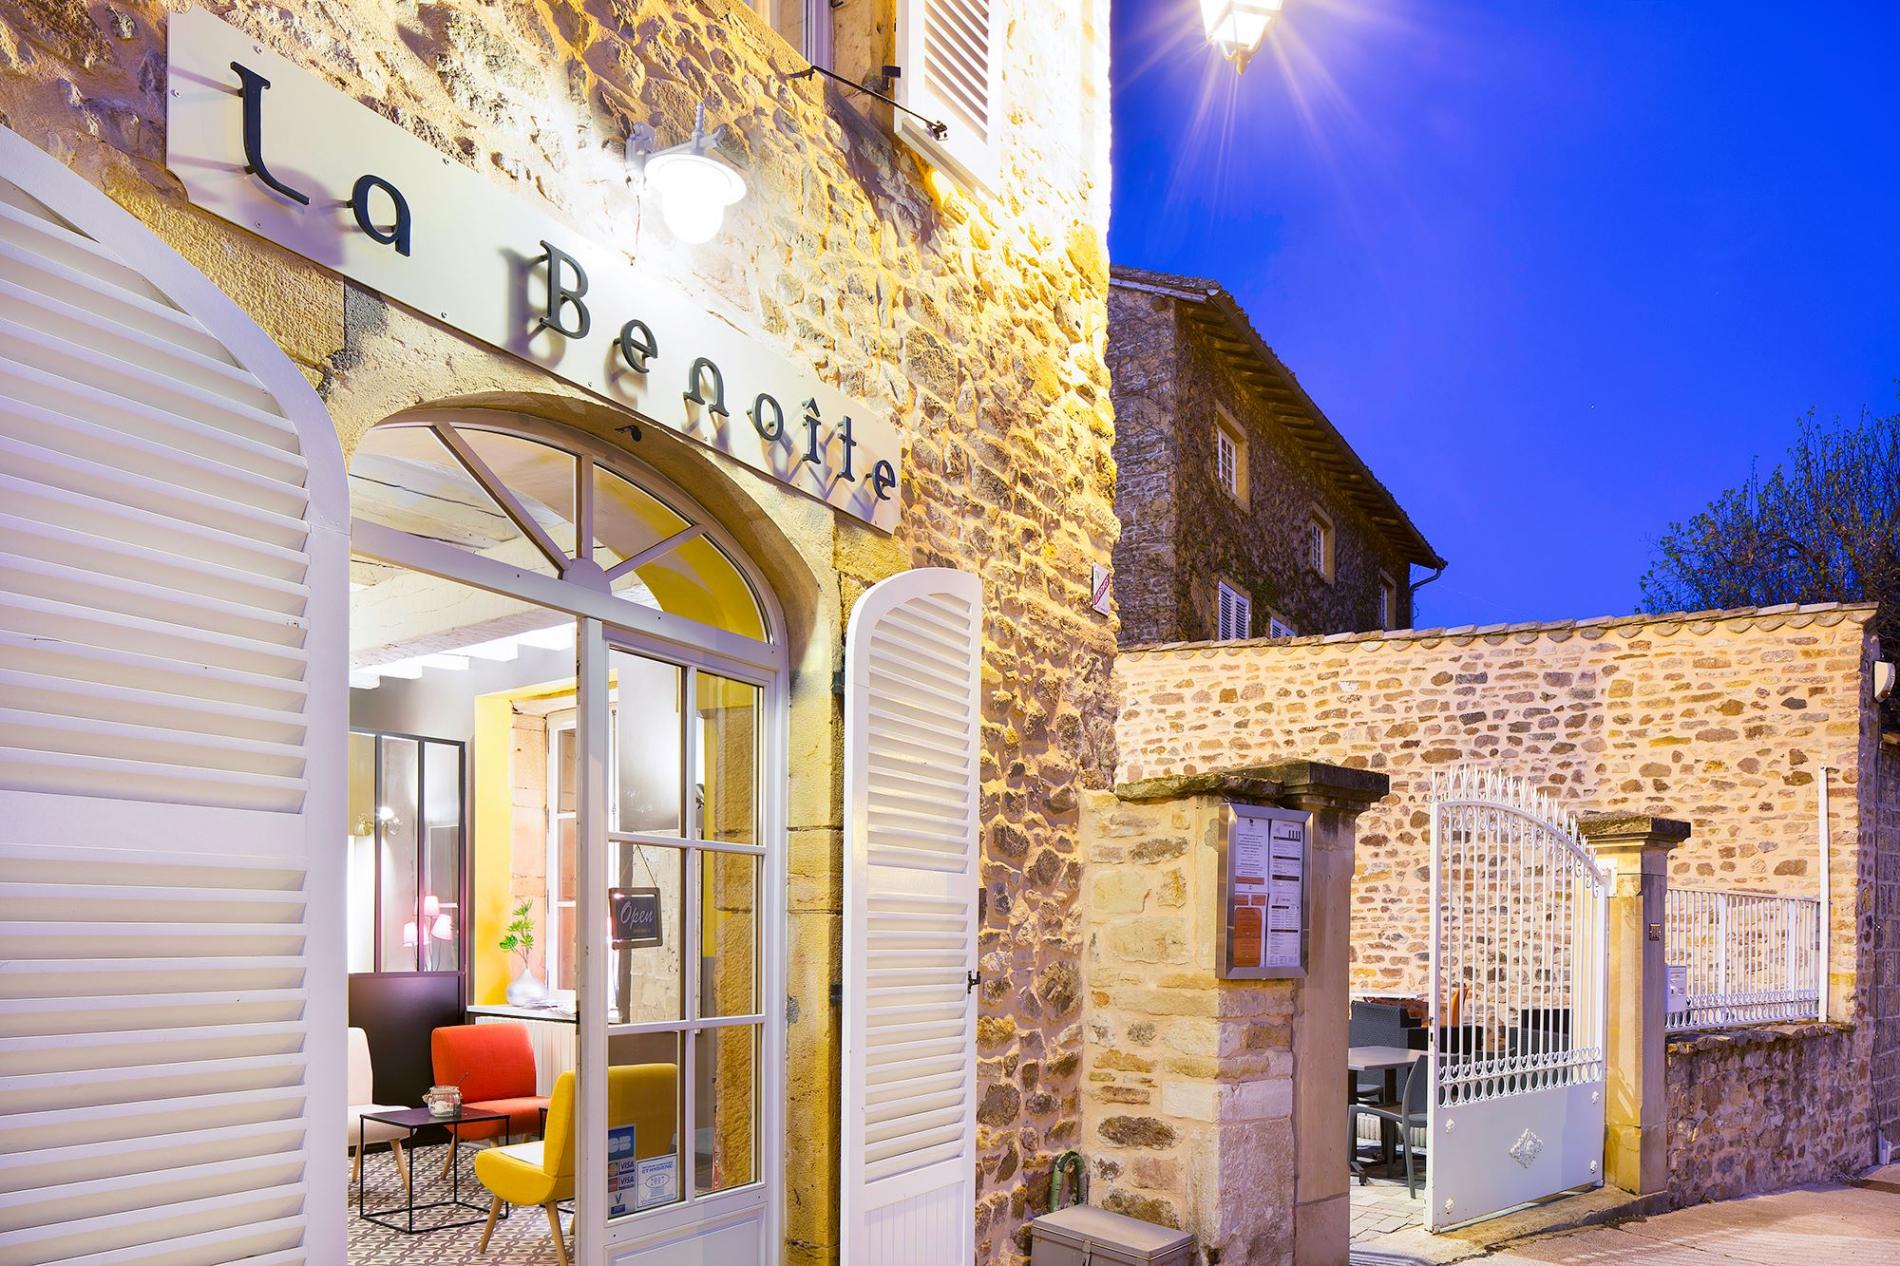 Hôtel Restaurant La Benoite